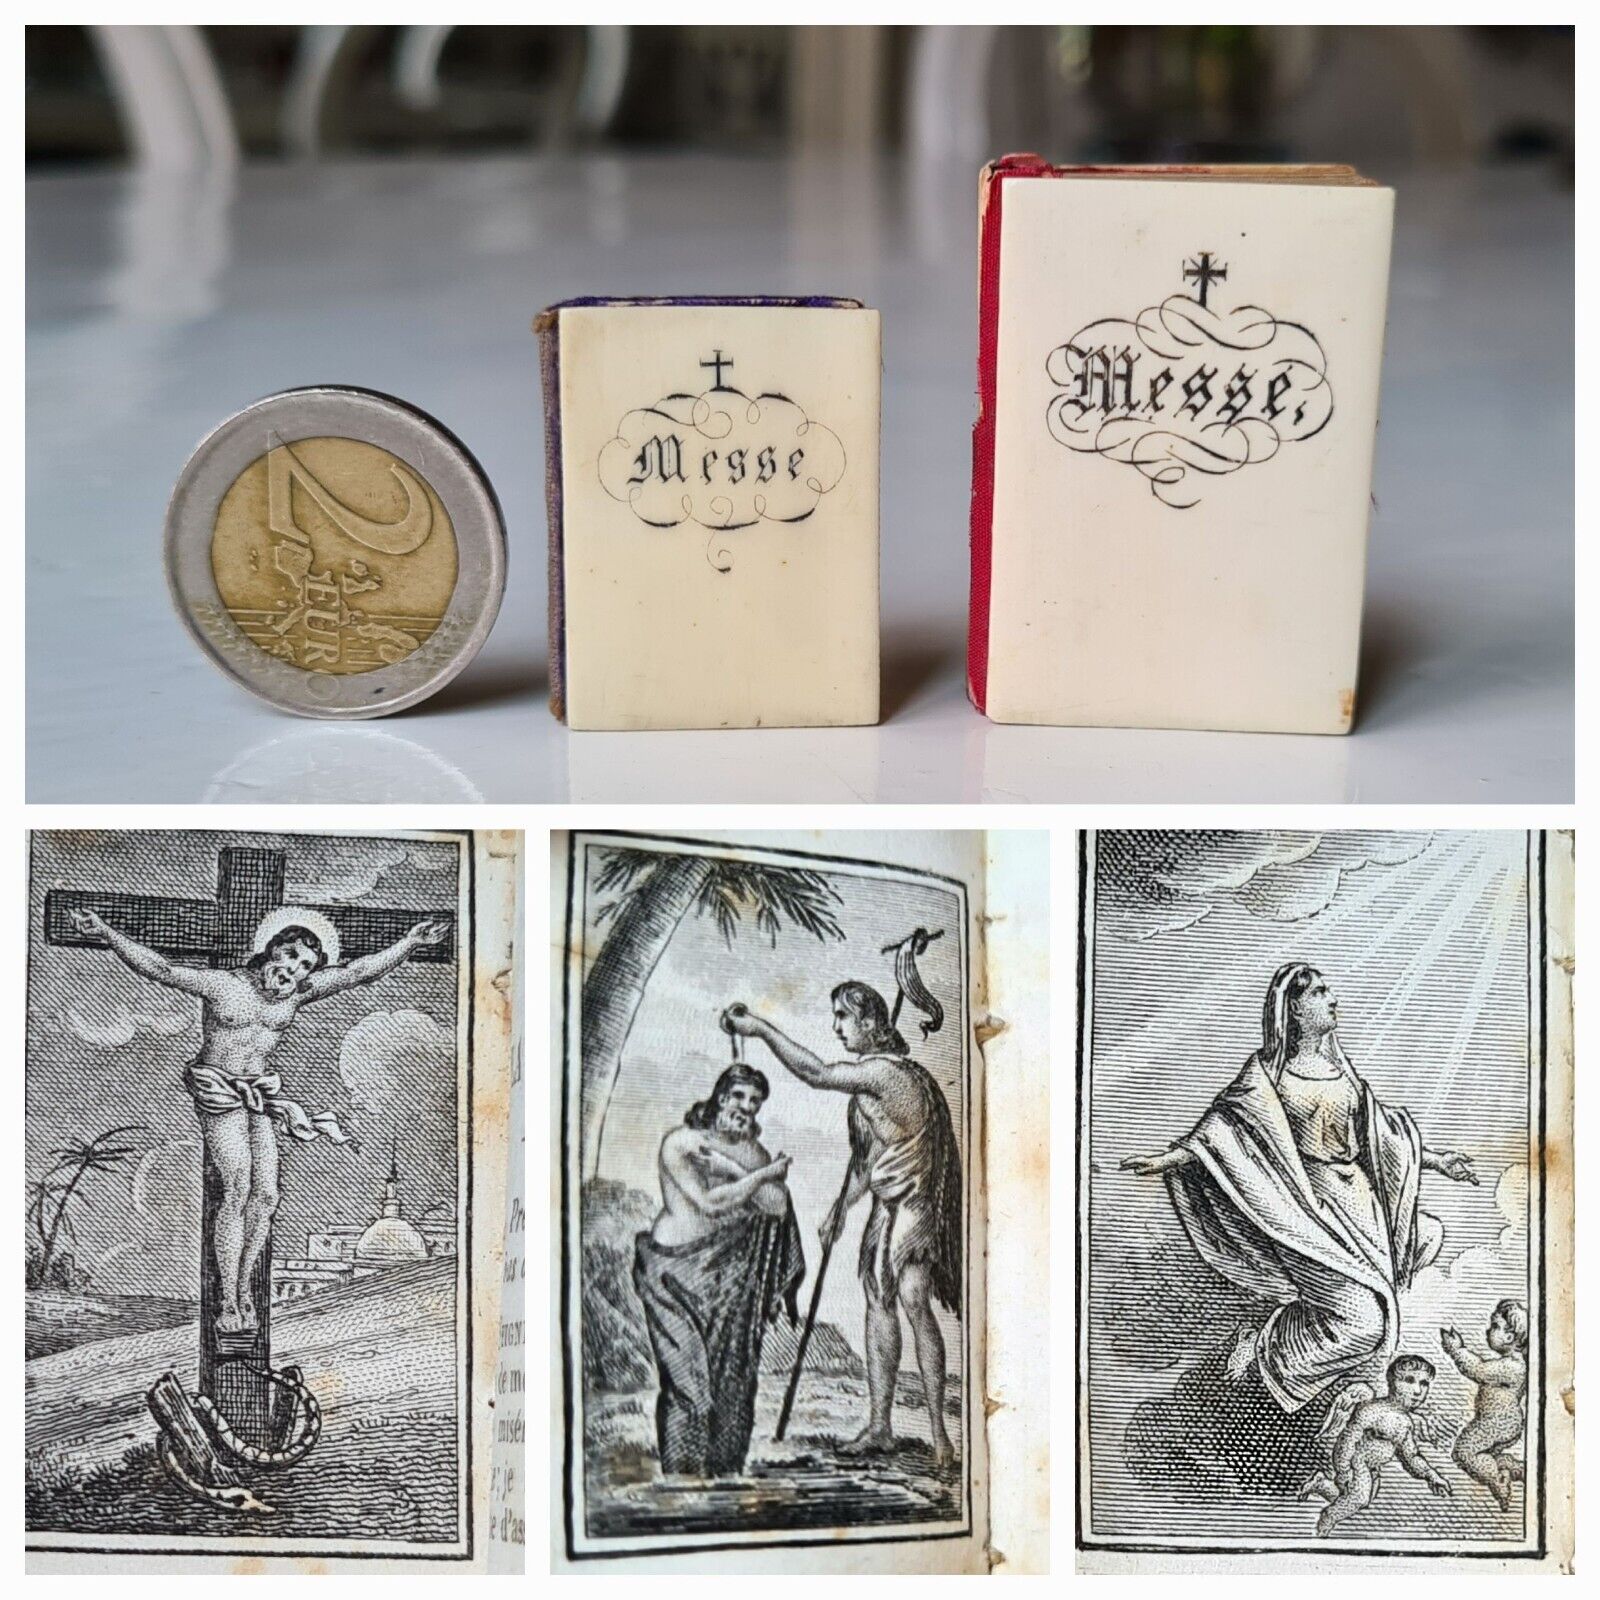 2 antique 1800's Paroissien, miniature prayerbooks, with engravings